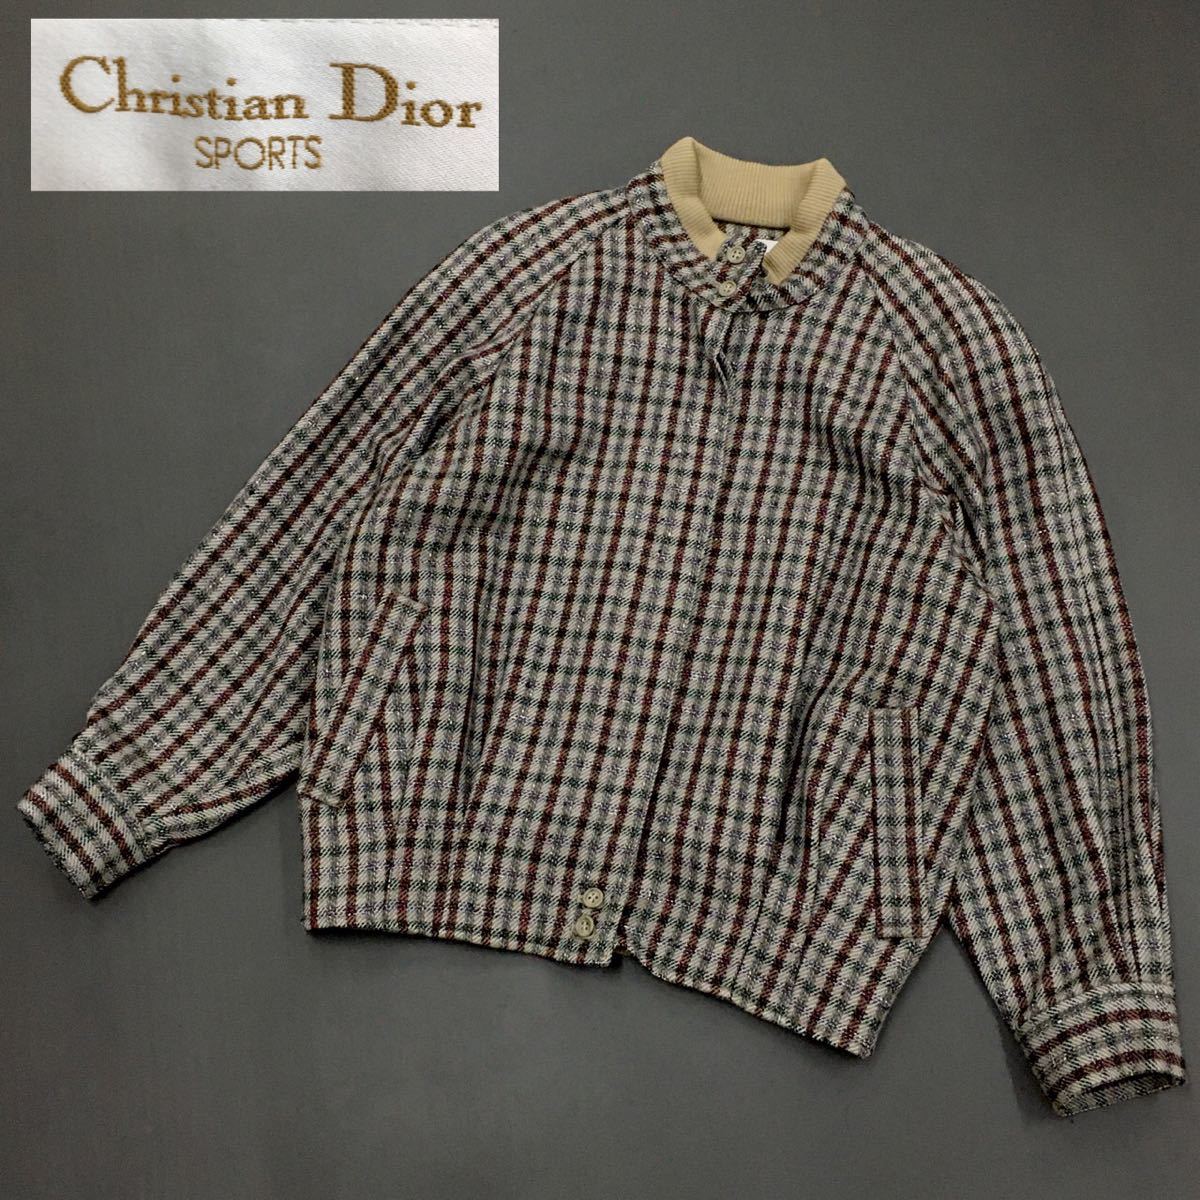 Christian Dior SPORTS クリスチャンディオール スポーツ スタンド